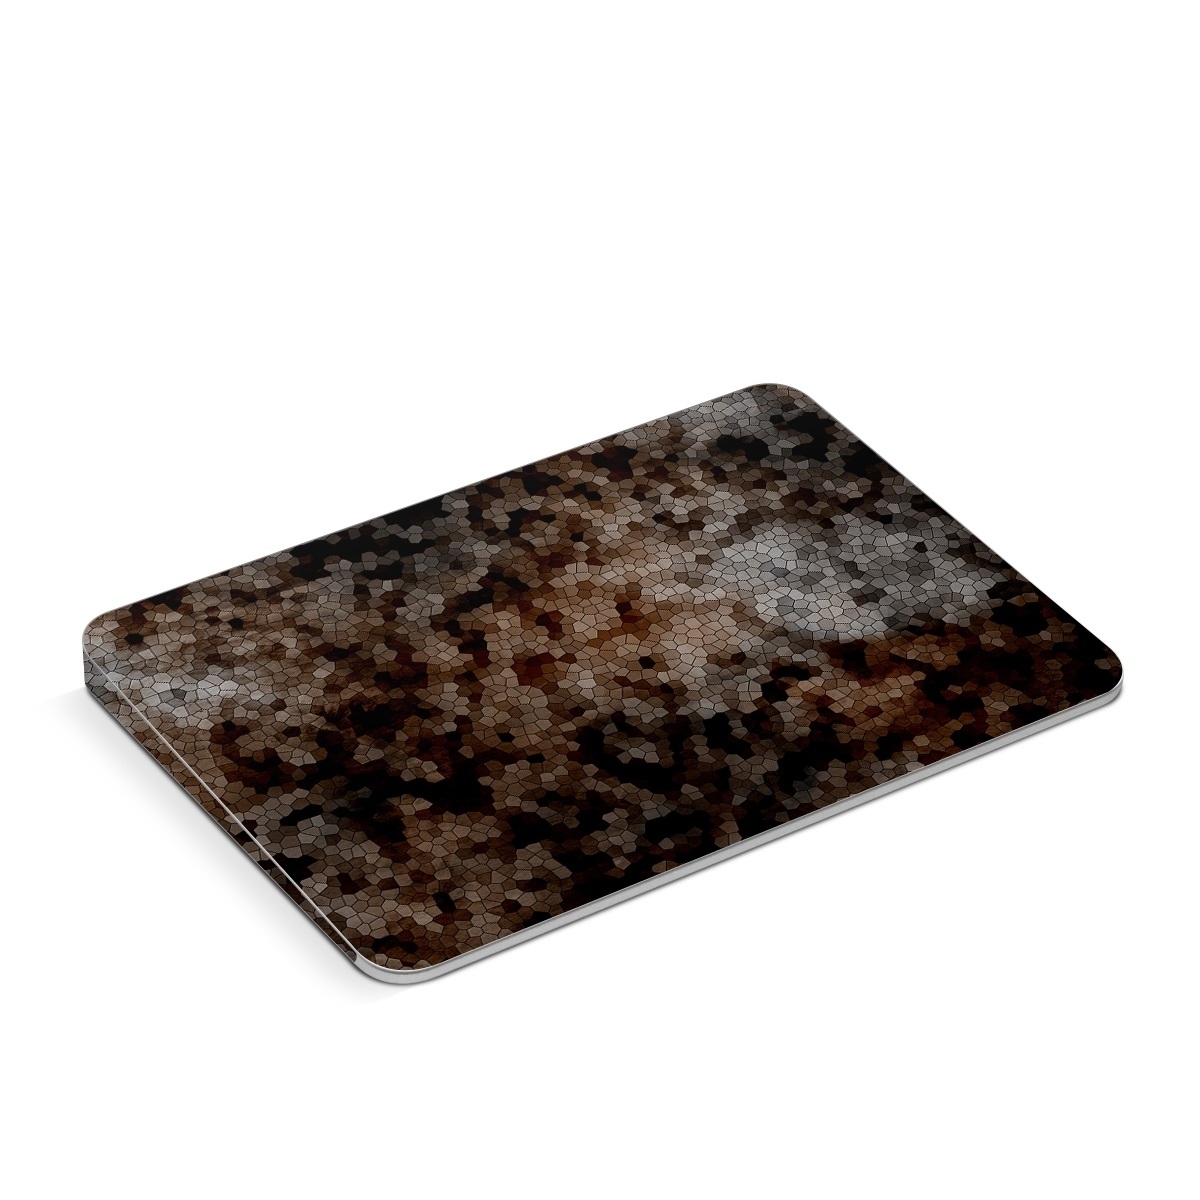 Apple Magic Trackpad Skin design of Brown, Design, Soil, Pattern, Rock, Rust, Granite, Metal, with black, white, gray, brown colors